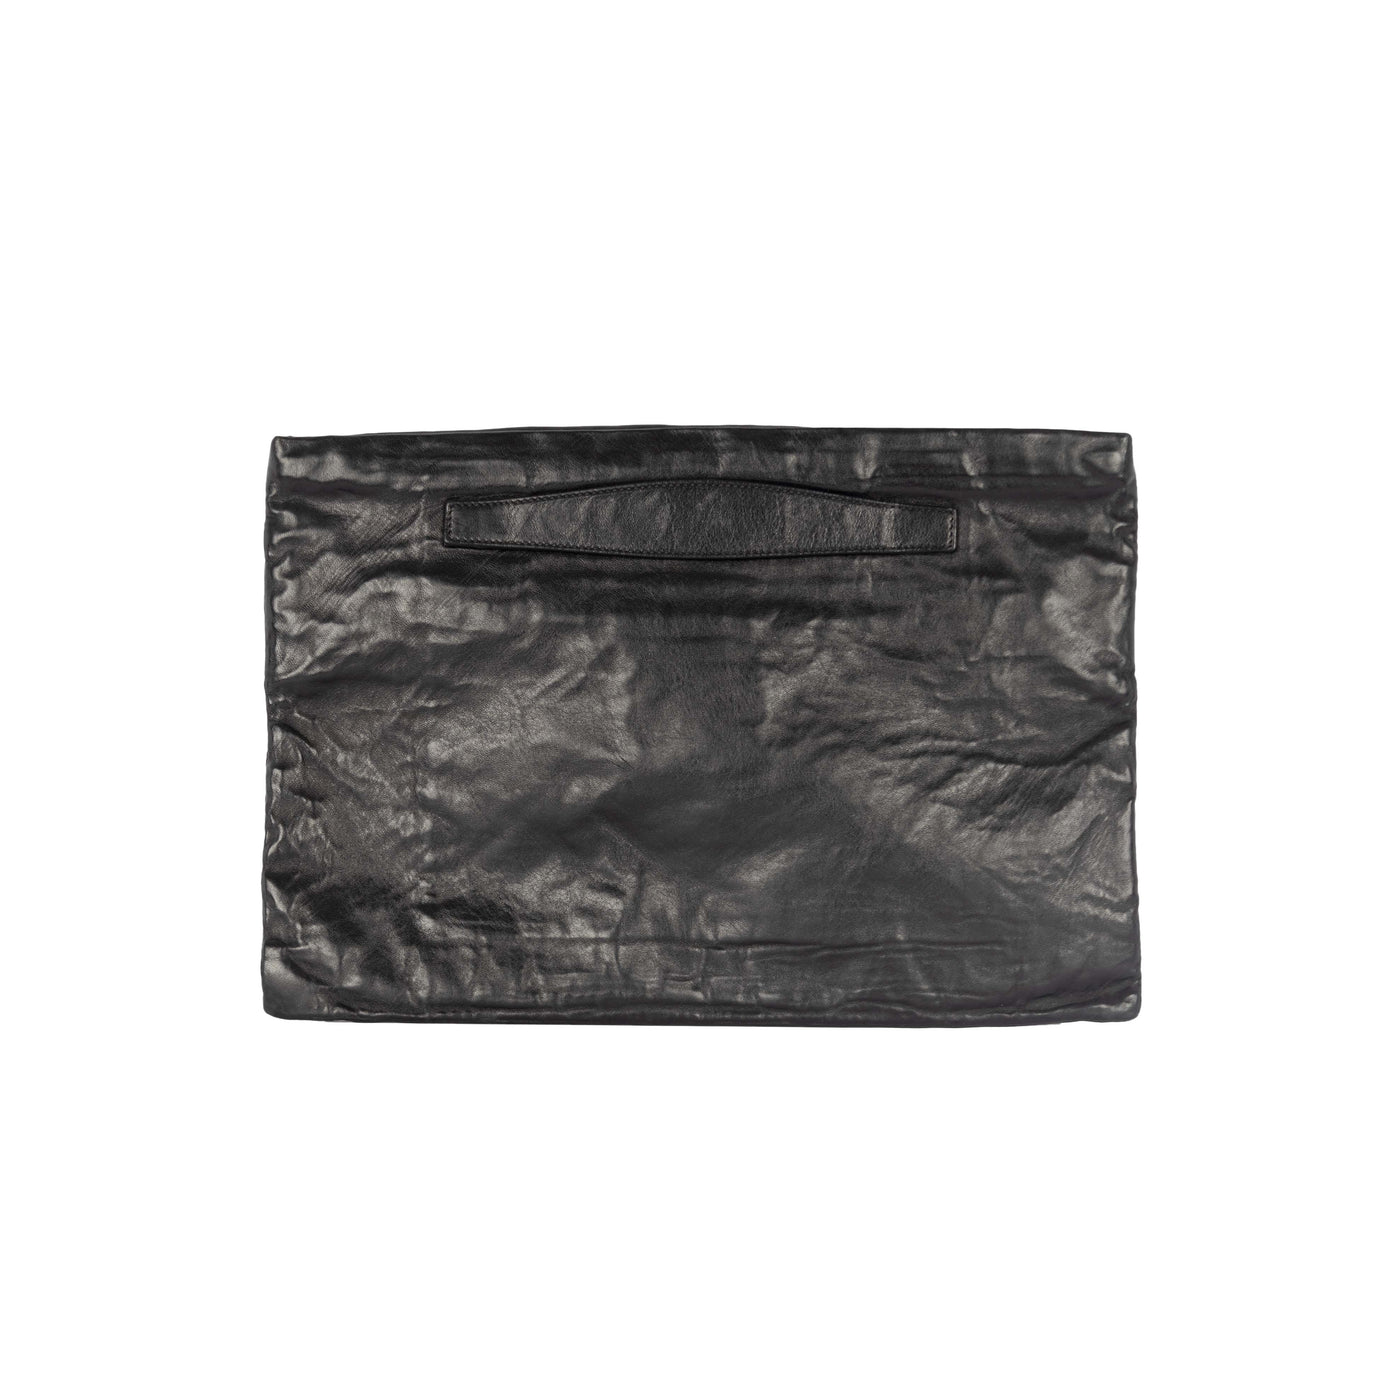 Secondhand Prada Black Leather Clutch